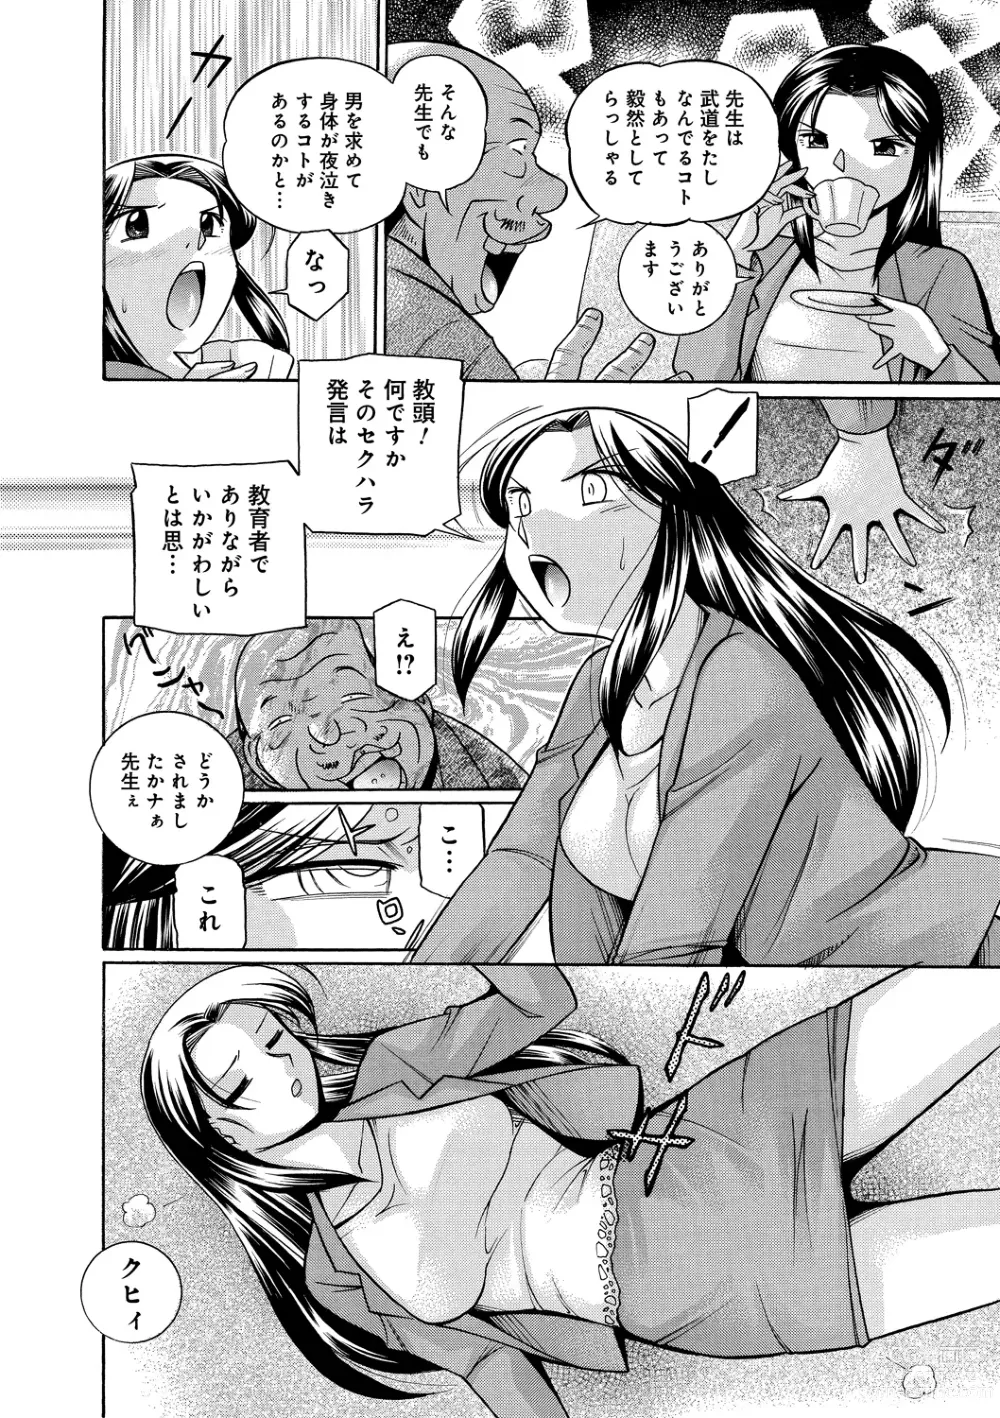 Page 7 of manga Jokyoushi Kyouko ~Kairaku Choukyoushitsu~